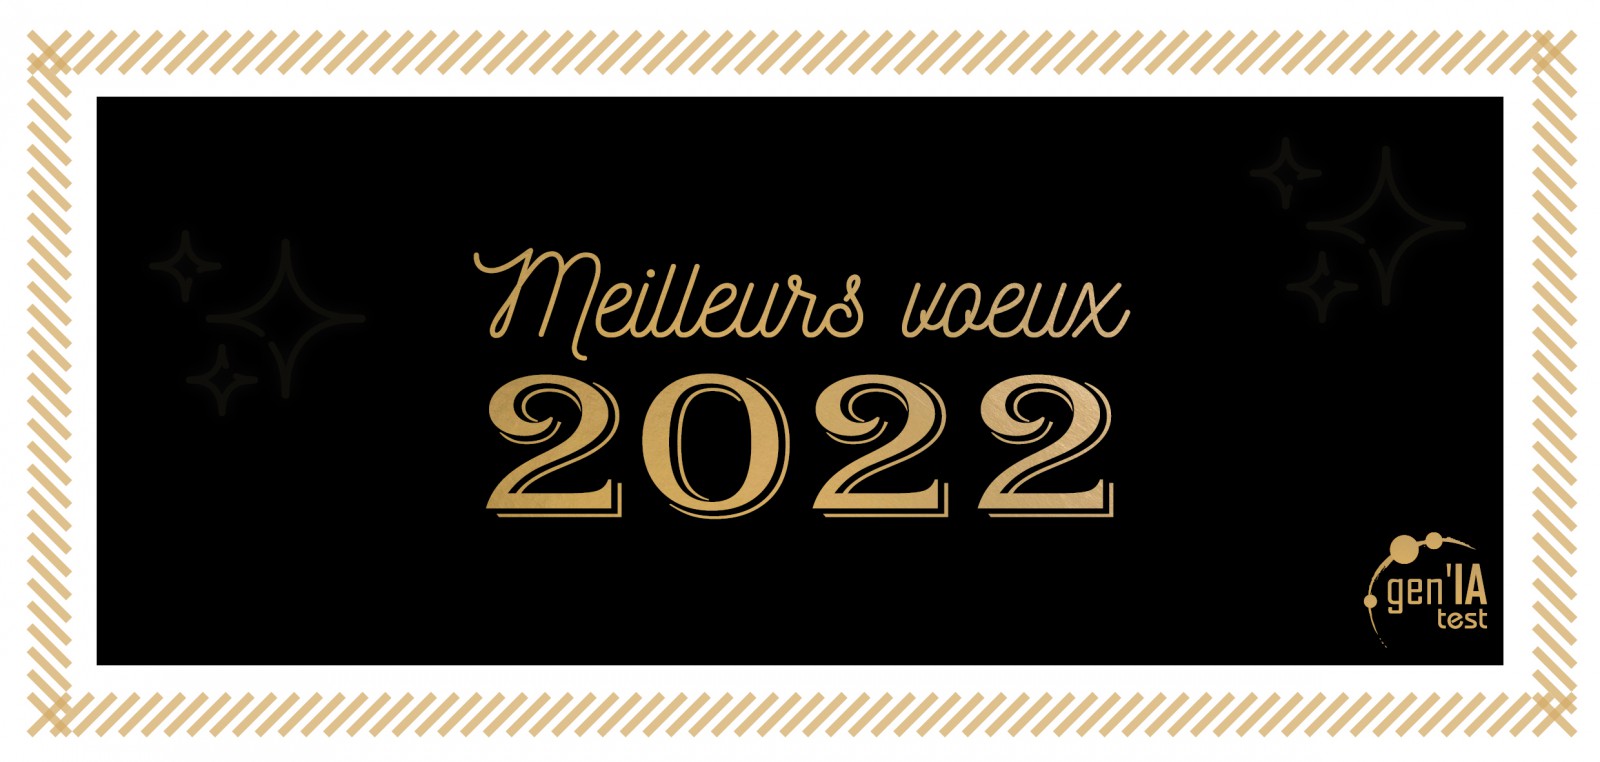 Meilleurs vœux 2022 !